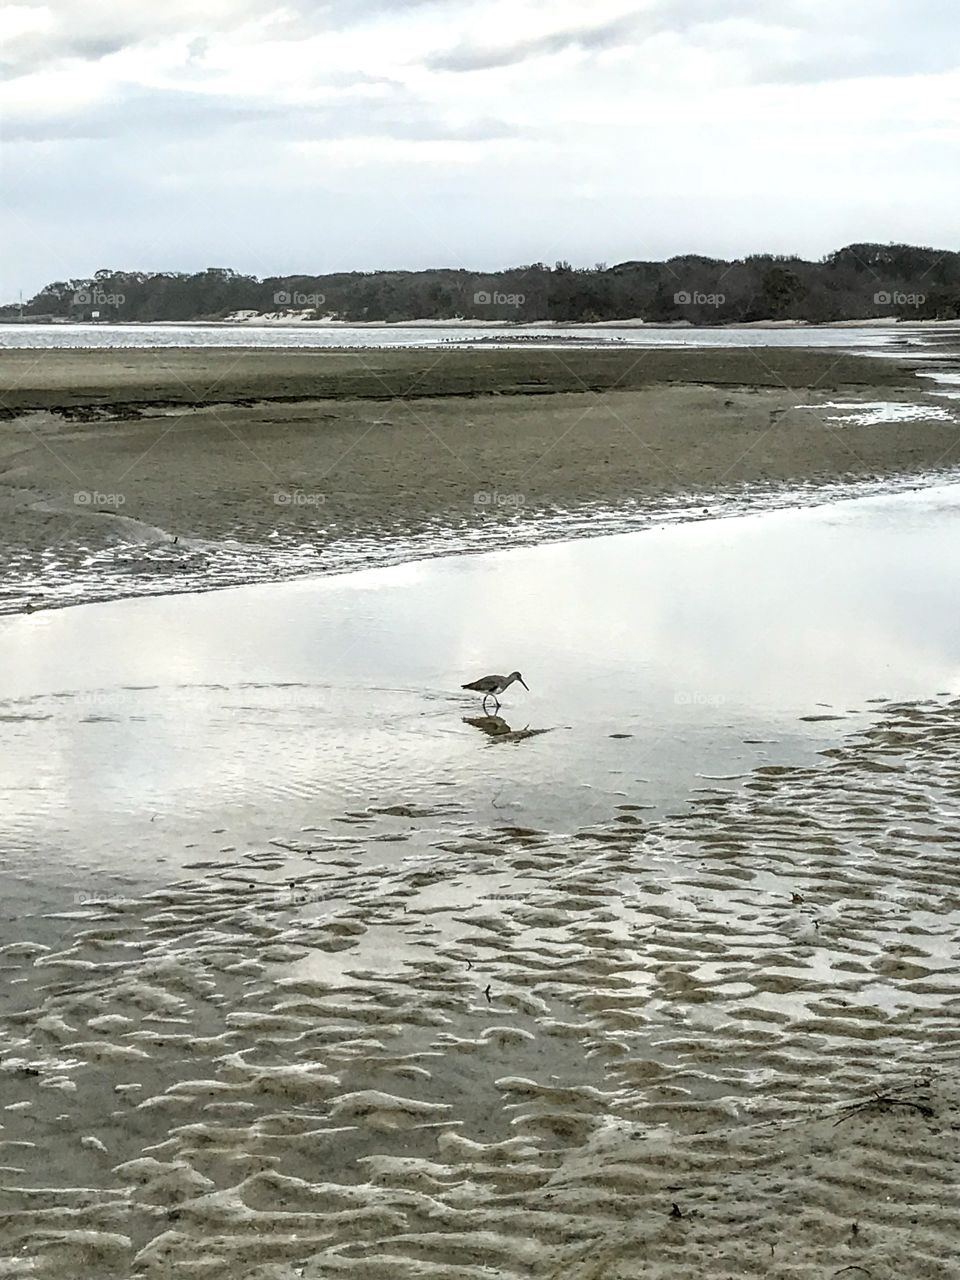 Shorebird (Willet)feeding in brackish waters at Matanzas Inlet